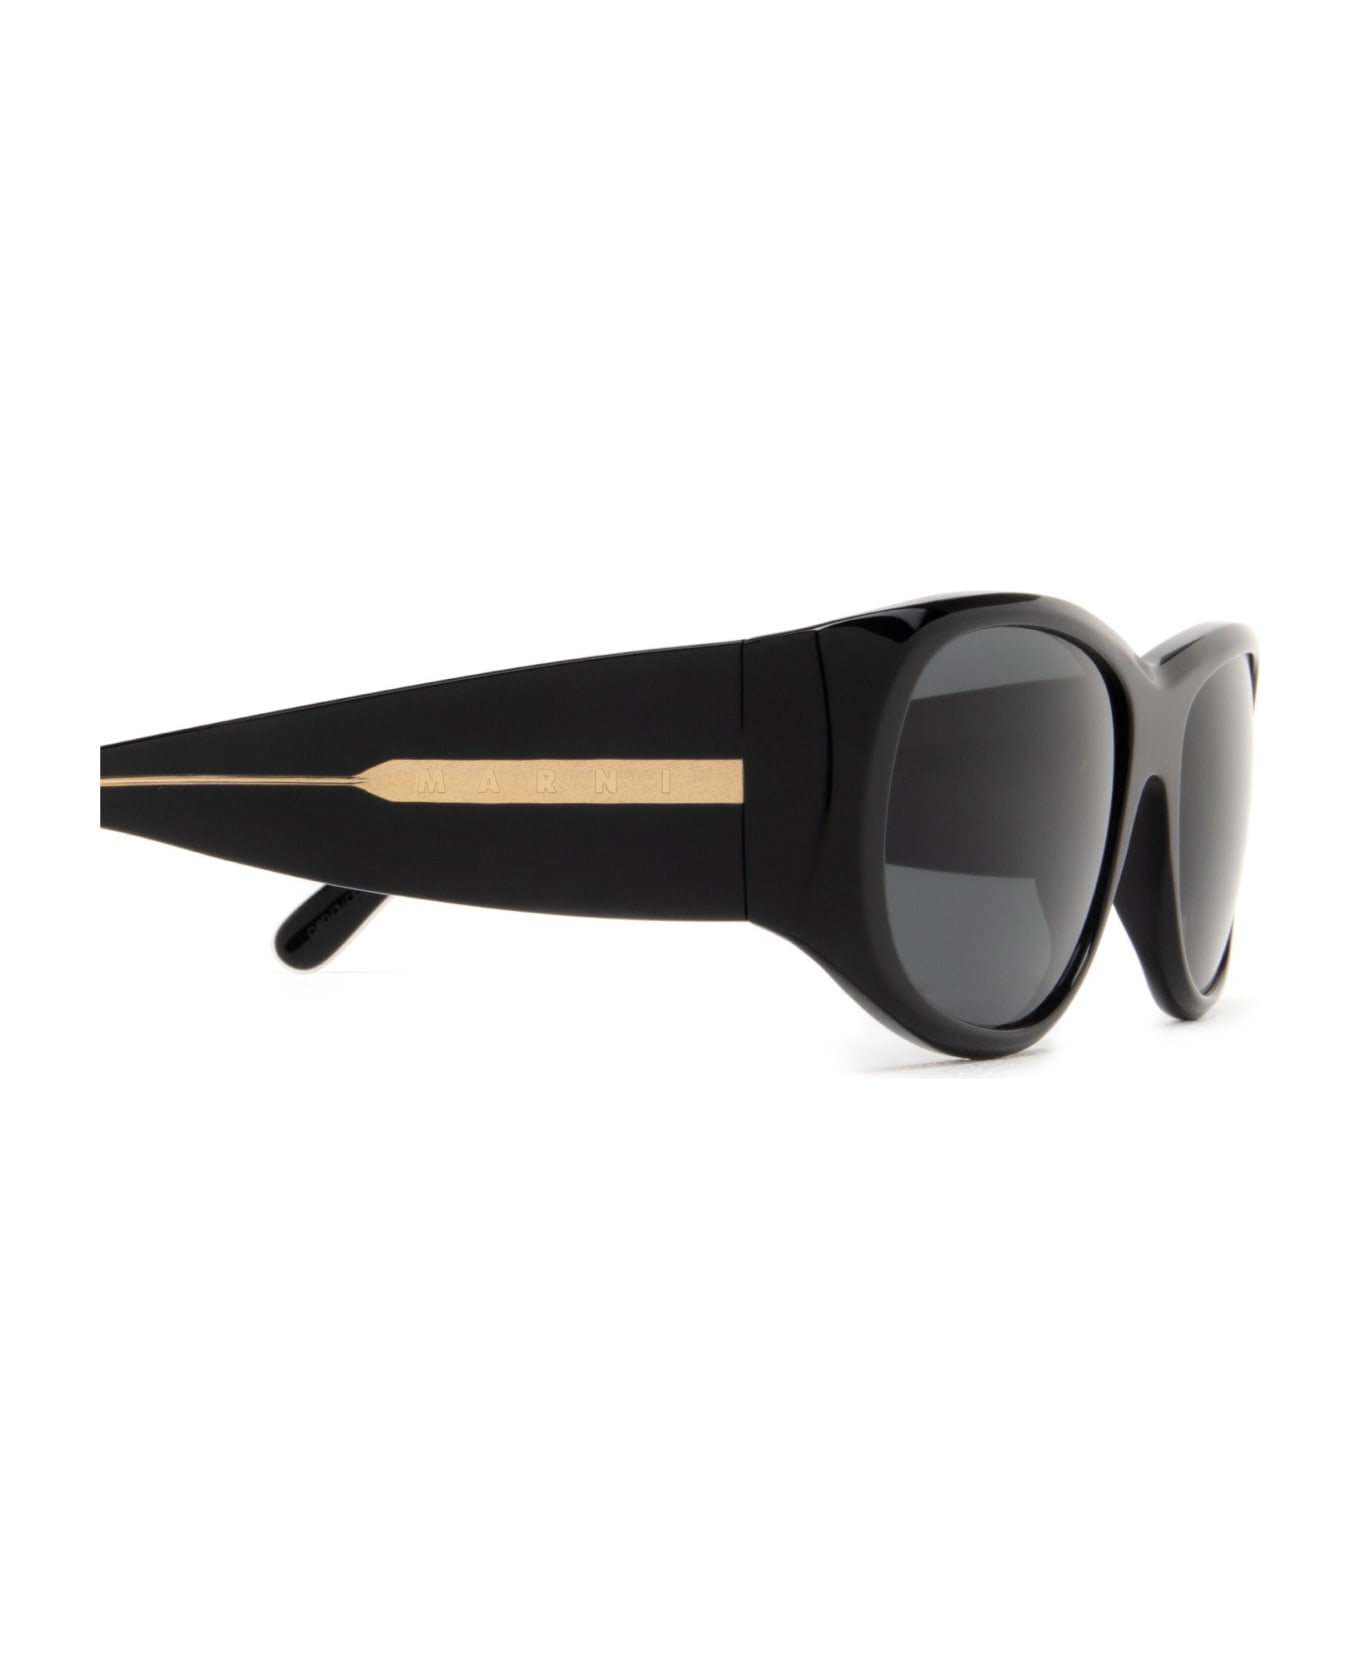 Marni Eyewear Orinoco River Black Sunglasses - Black